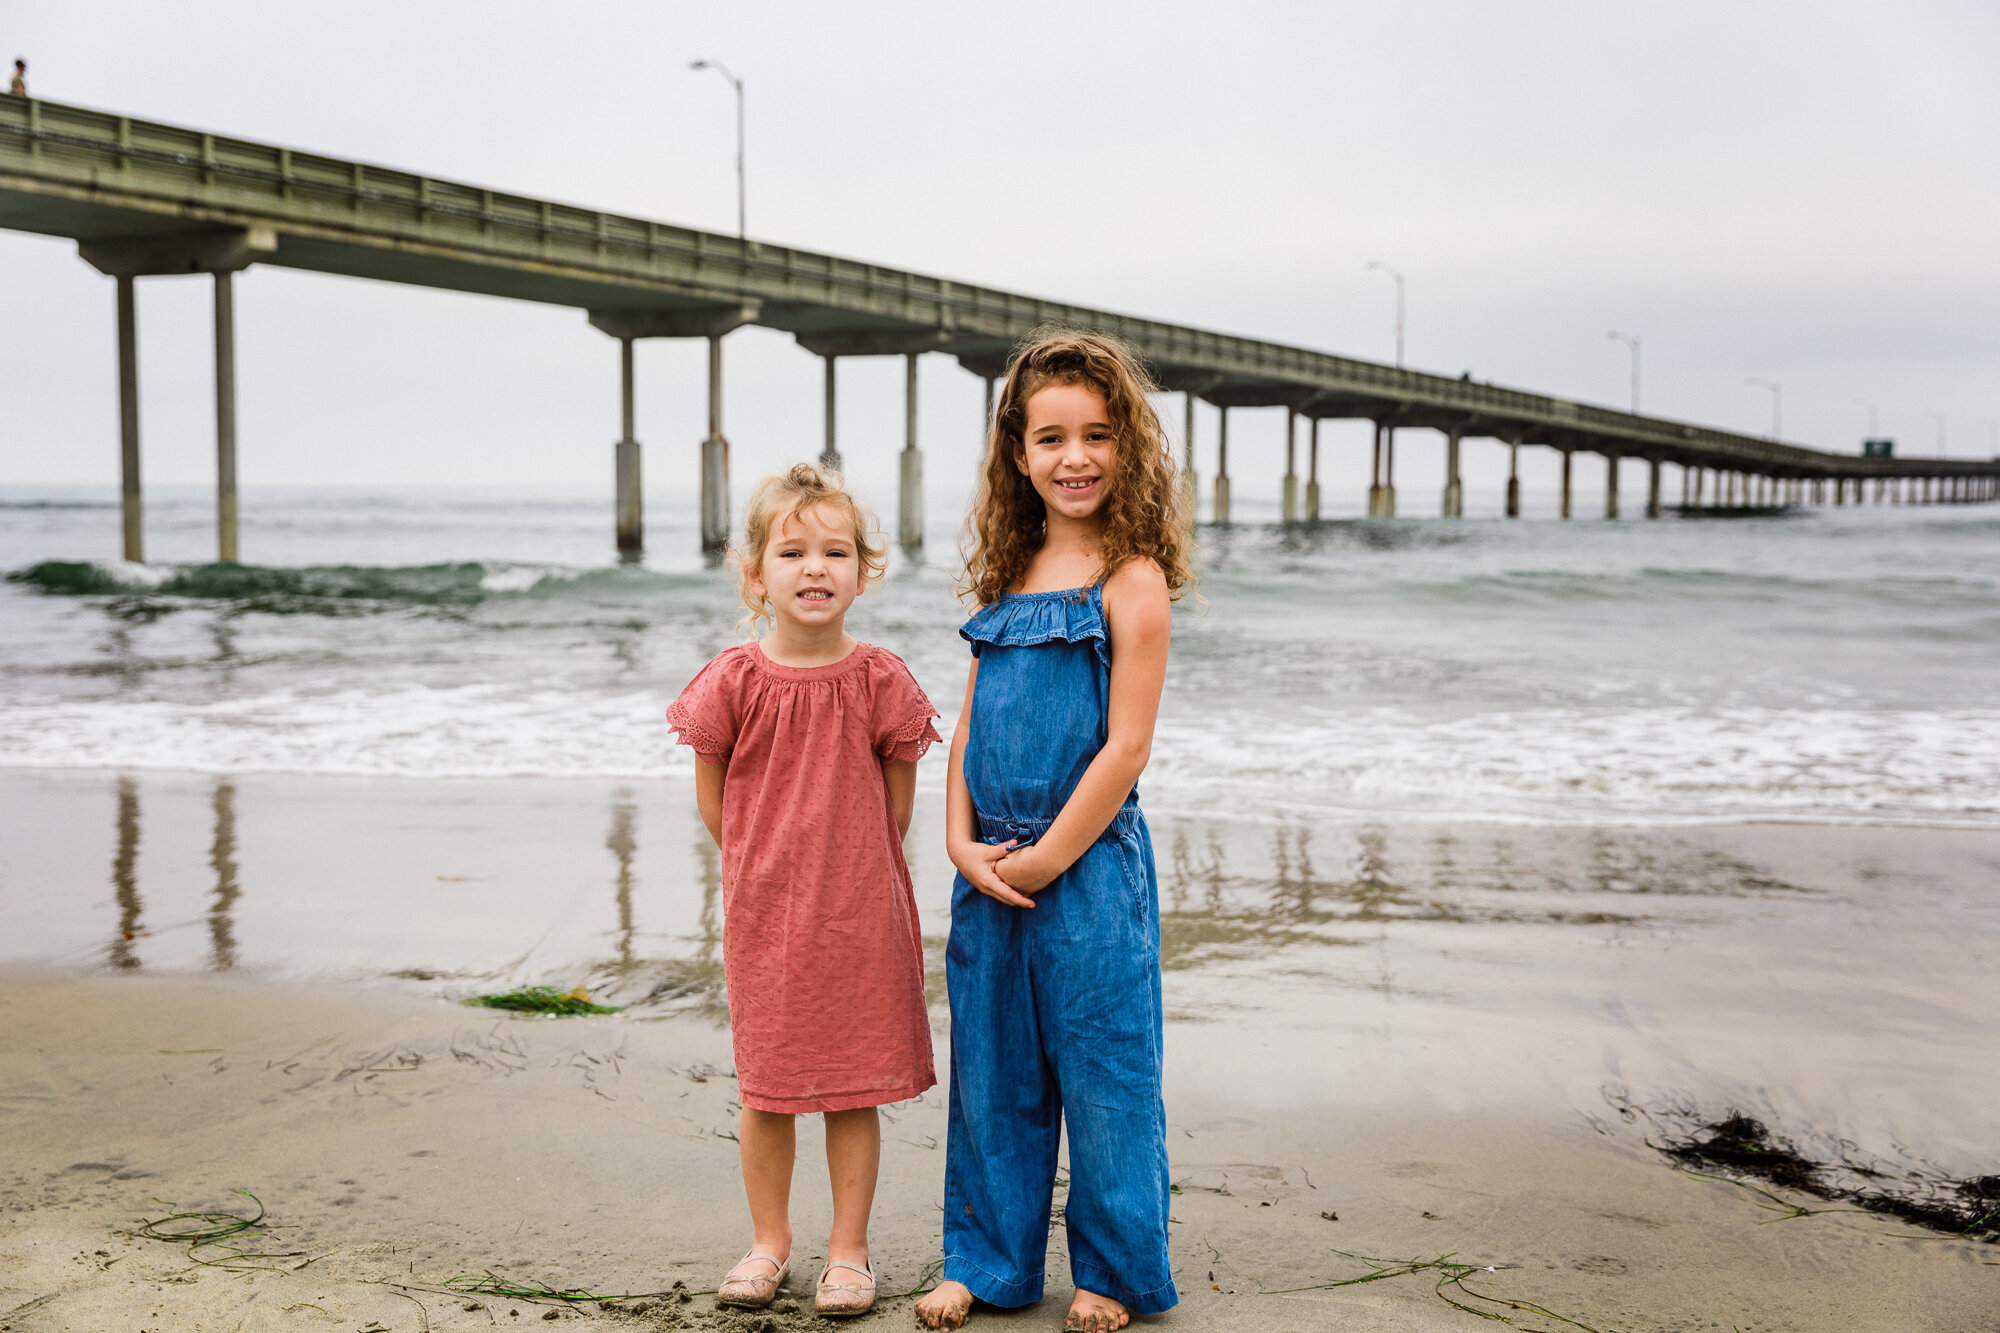 Family Portrait Photography Session at Ocean Beach Pier, San Diego, California-24.jpg